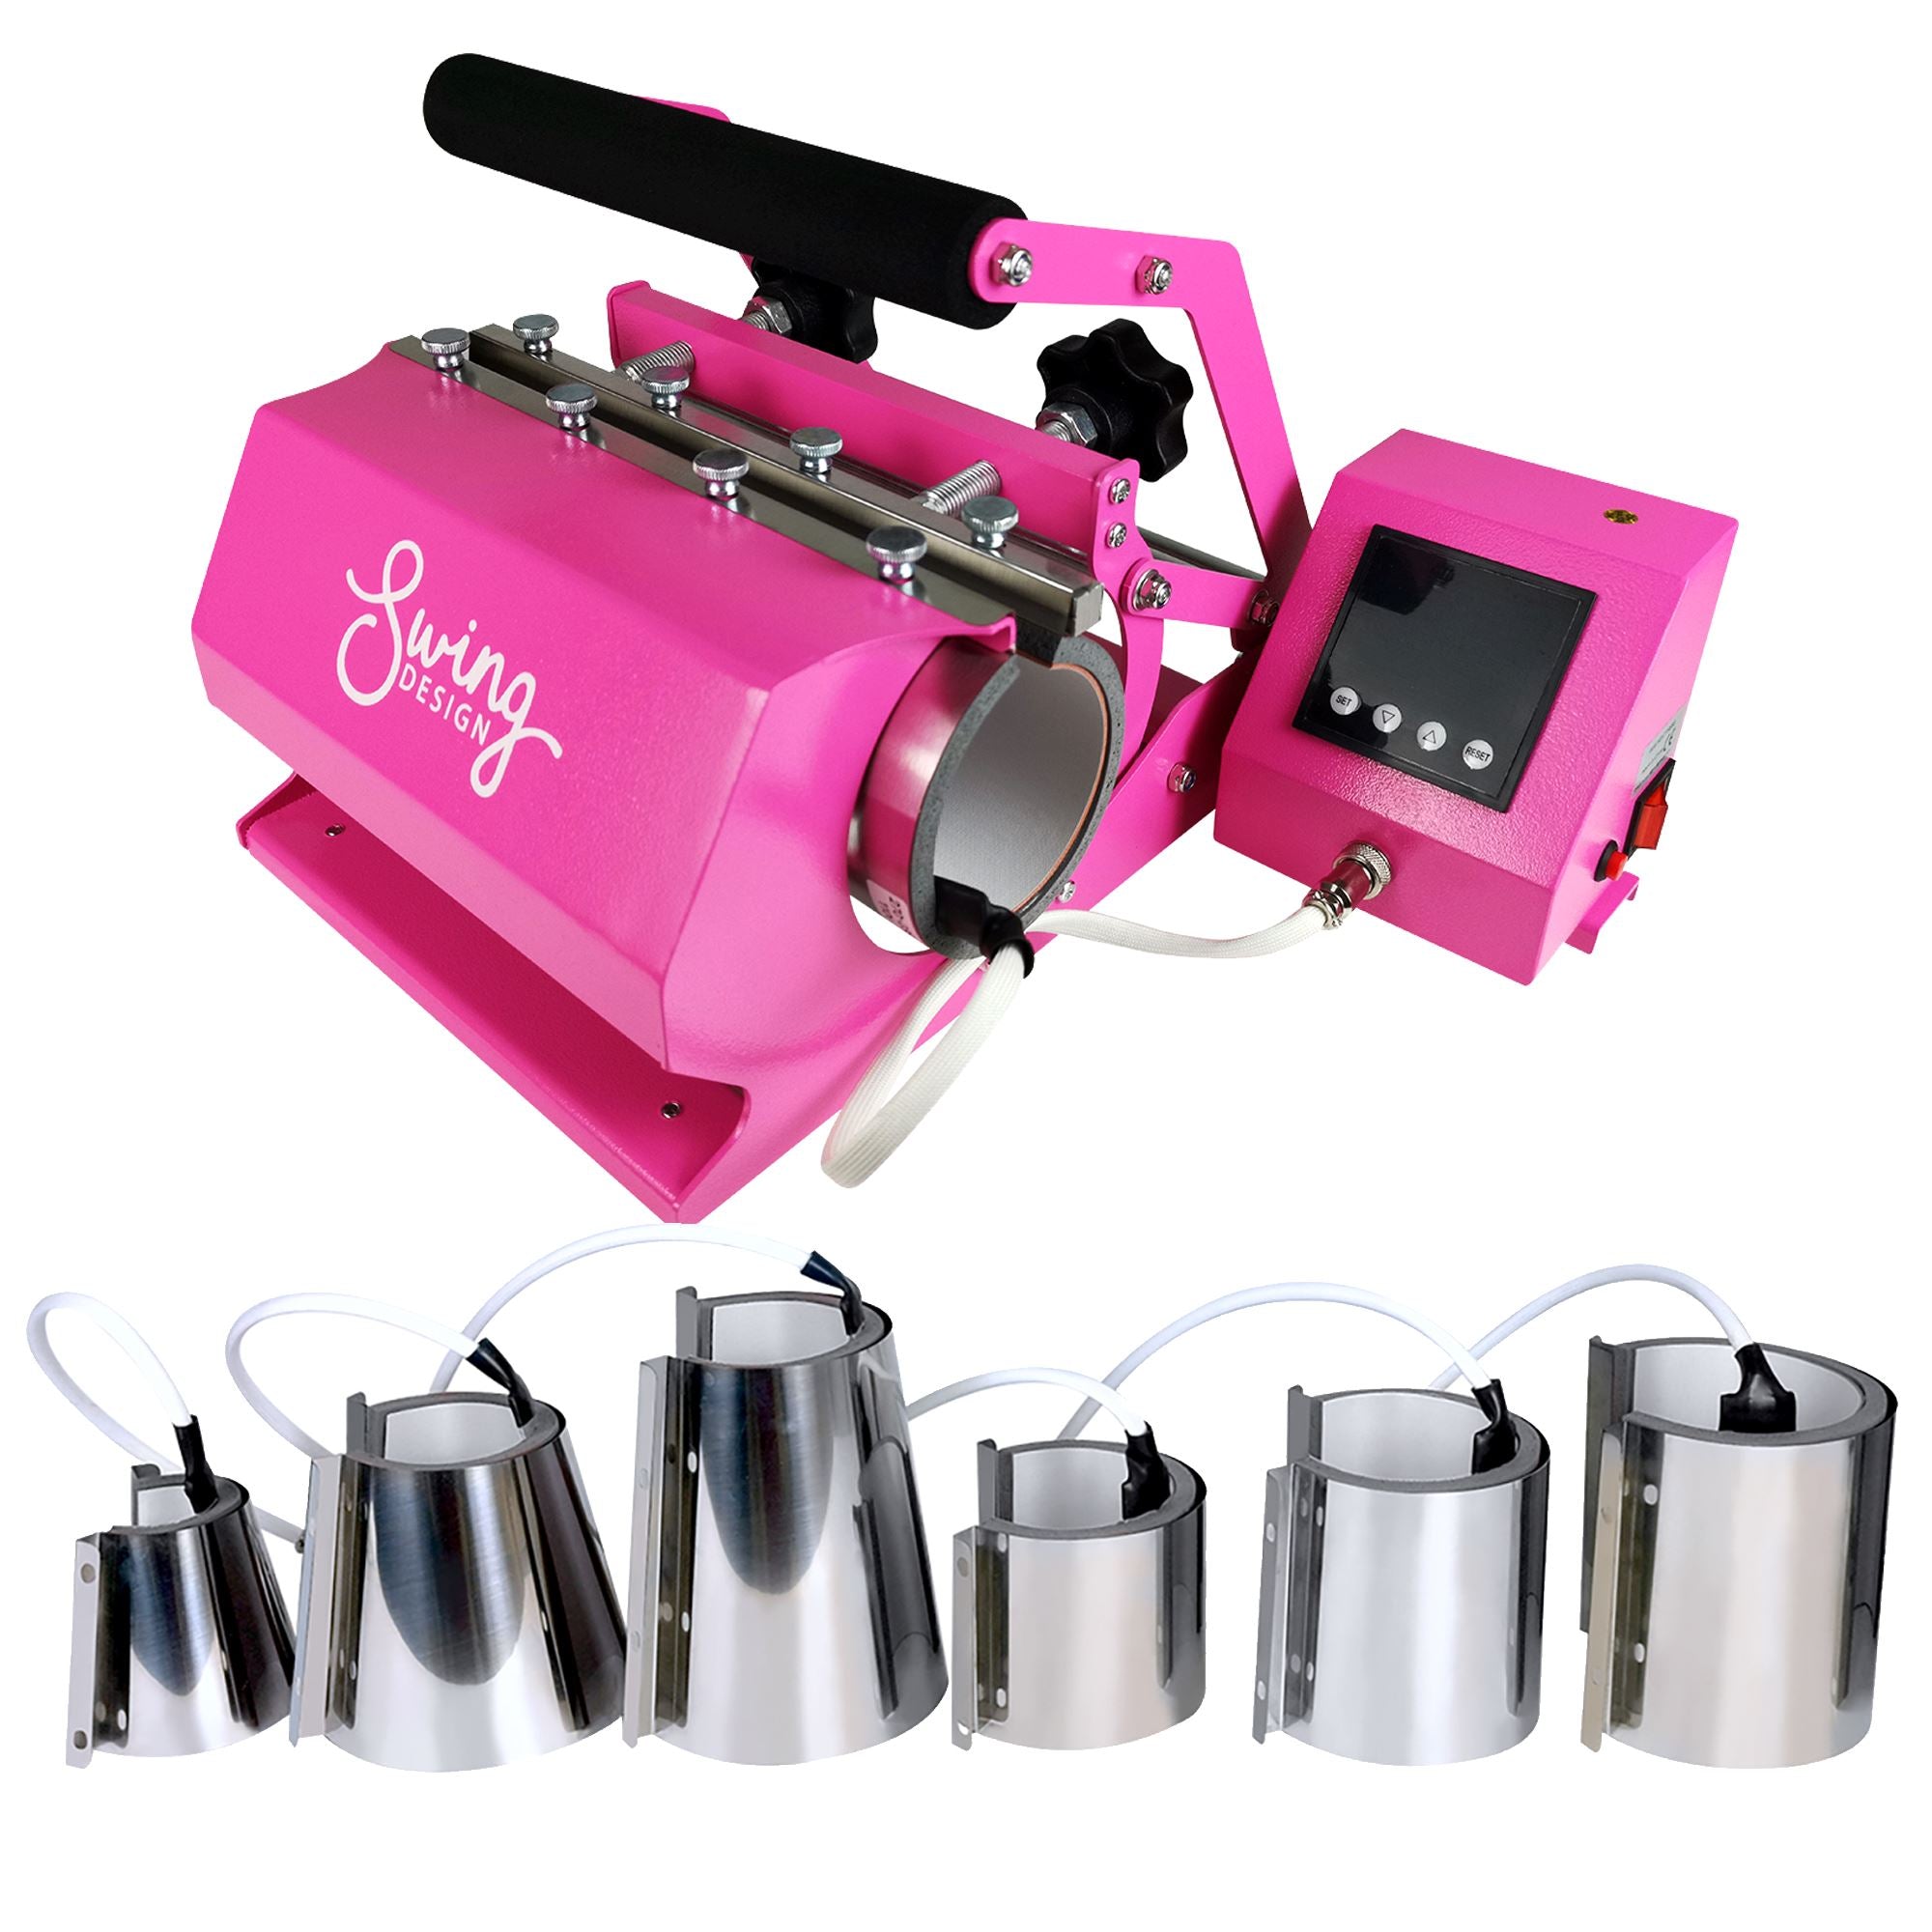 https://cdn.shopify.com/s/files/1/0224/5205/products/swing-design-7-in-1-tumbler-press-20oz30oz-pink-heat-press-swing-design-382093.jpg?v=1658544659